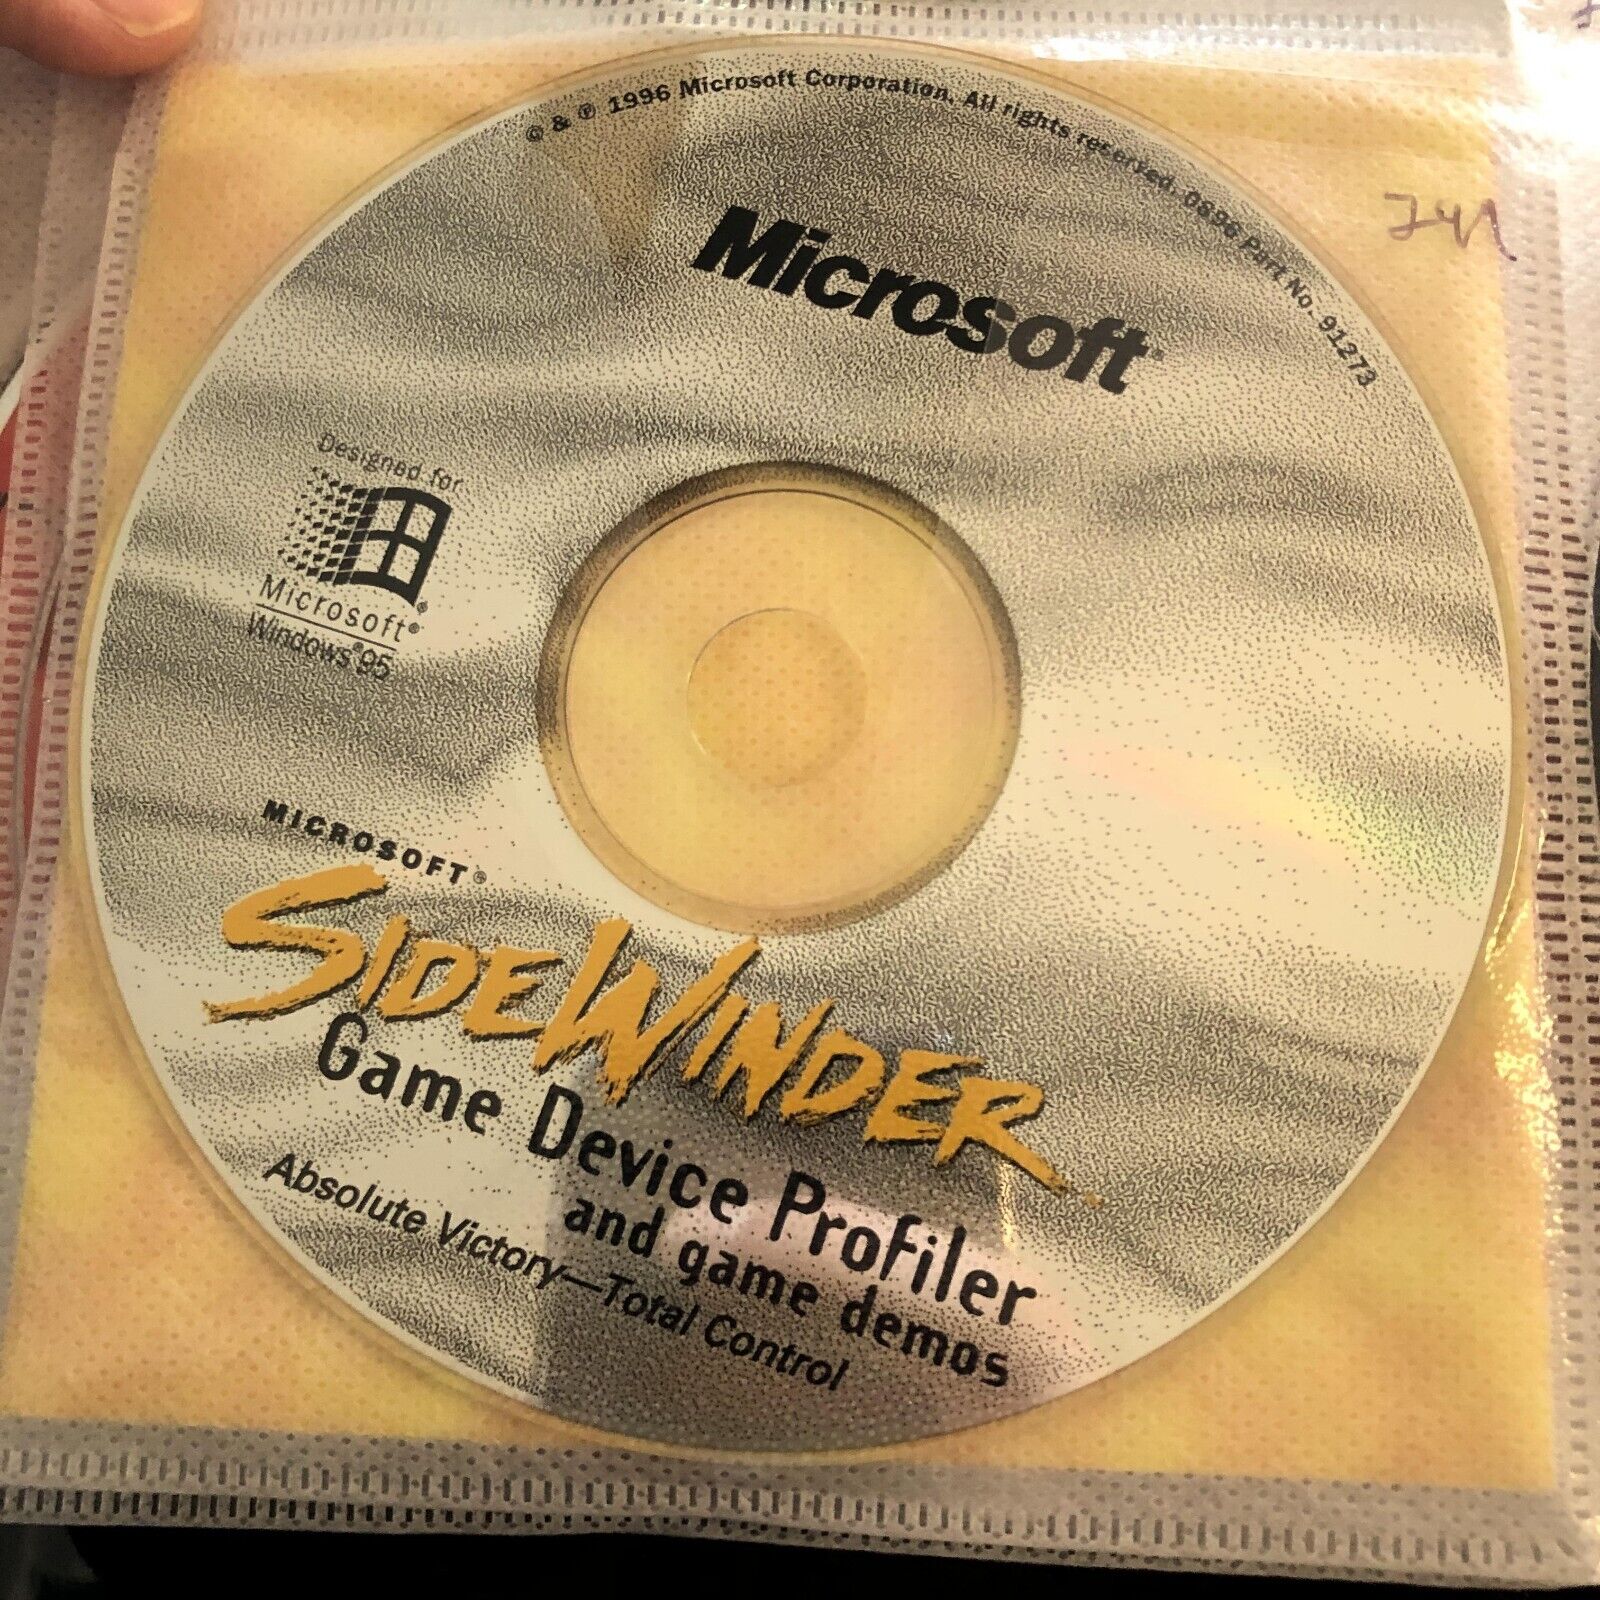 Microsoft SideWinder Gamepad Software Game Device Profiler Disc Windows